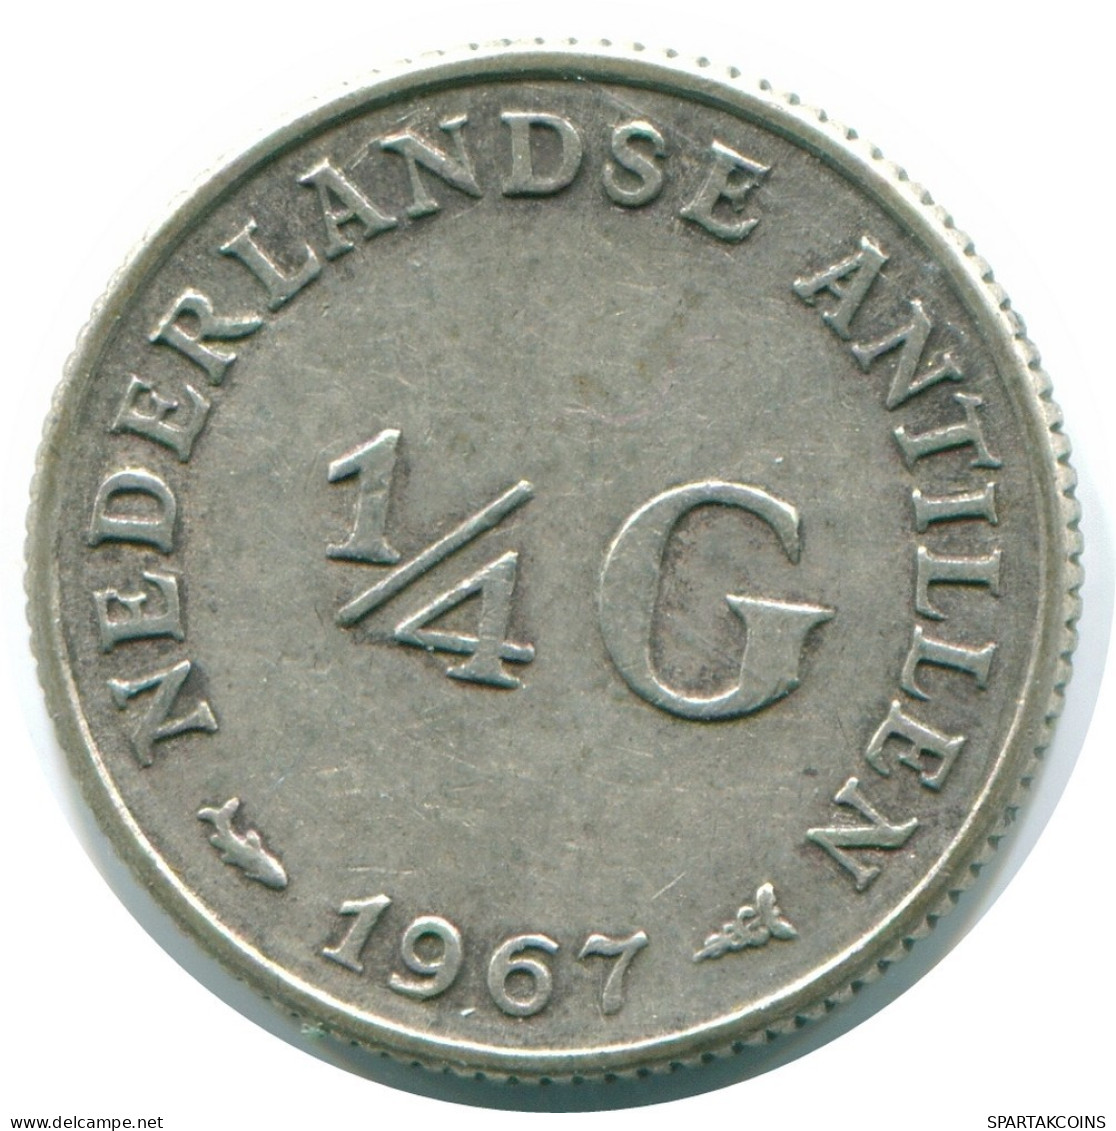 1/4 GULDEN 1967 NETHERLANDS ANTILLES SILVER Colonial Coin #NL11544.4.U.A - Antille Olandesi